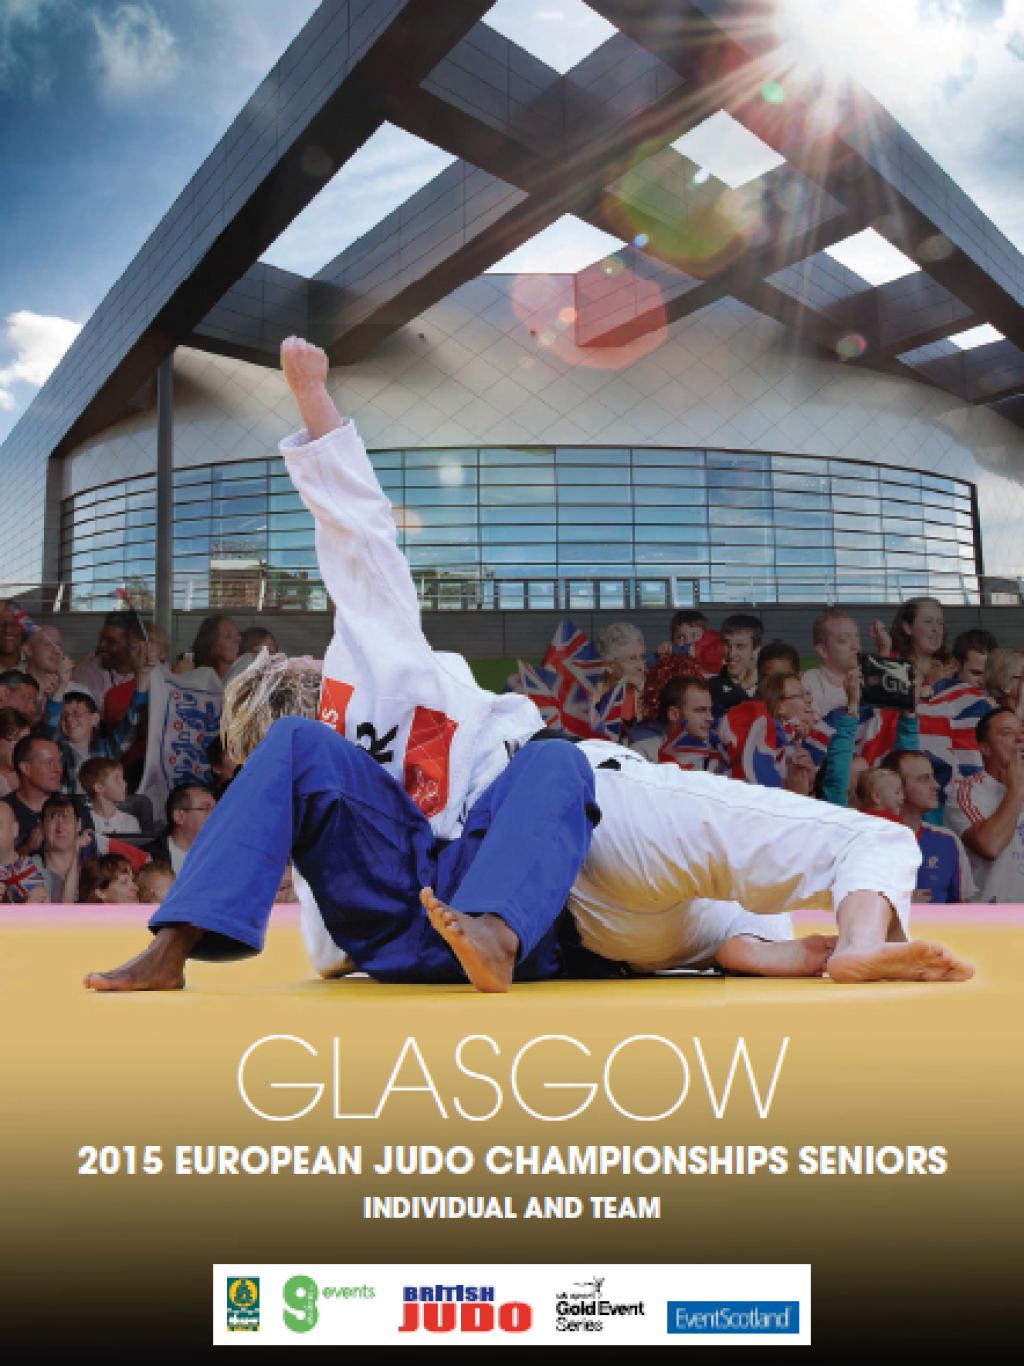 Glasgow to host 2015 European Judo Championships